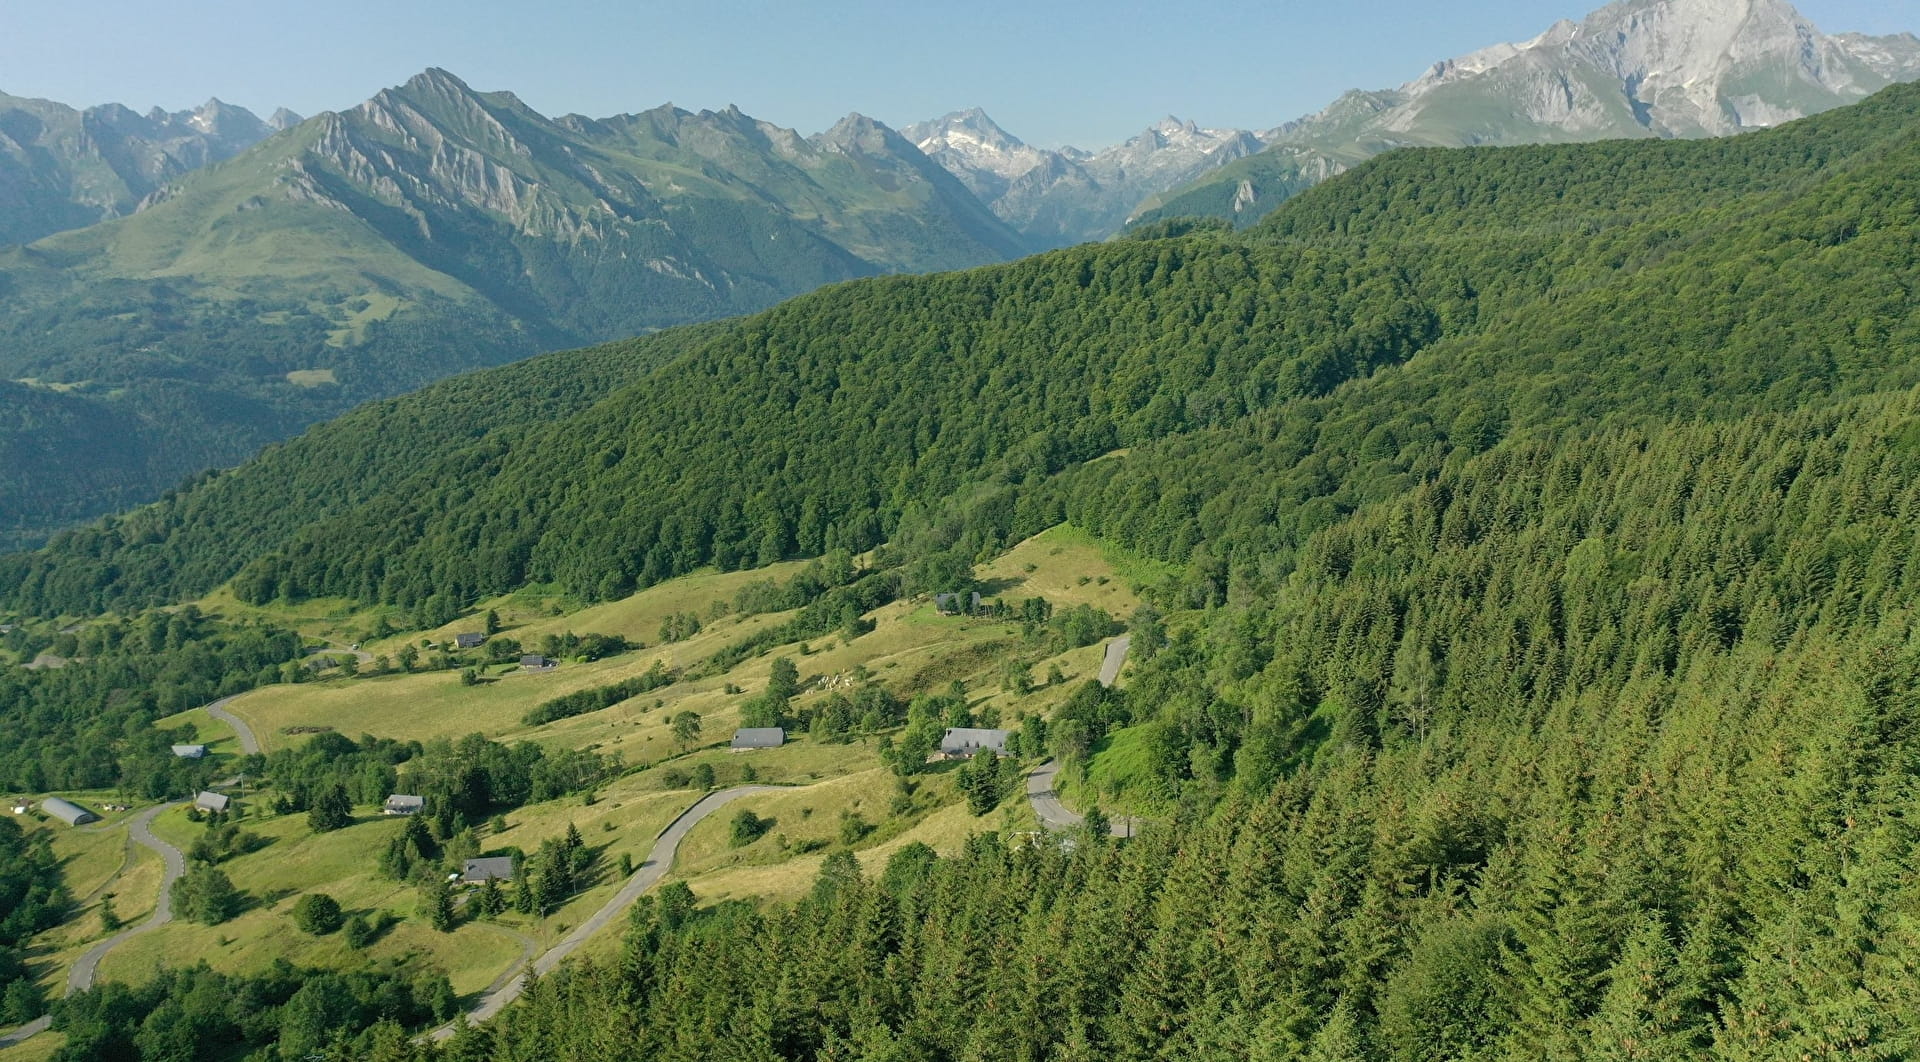 Fir forest at the Col de Couraduque in the Val d'Azun